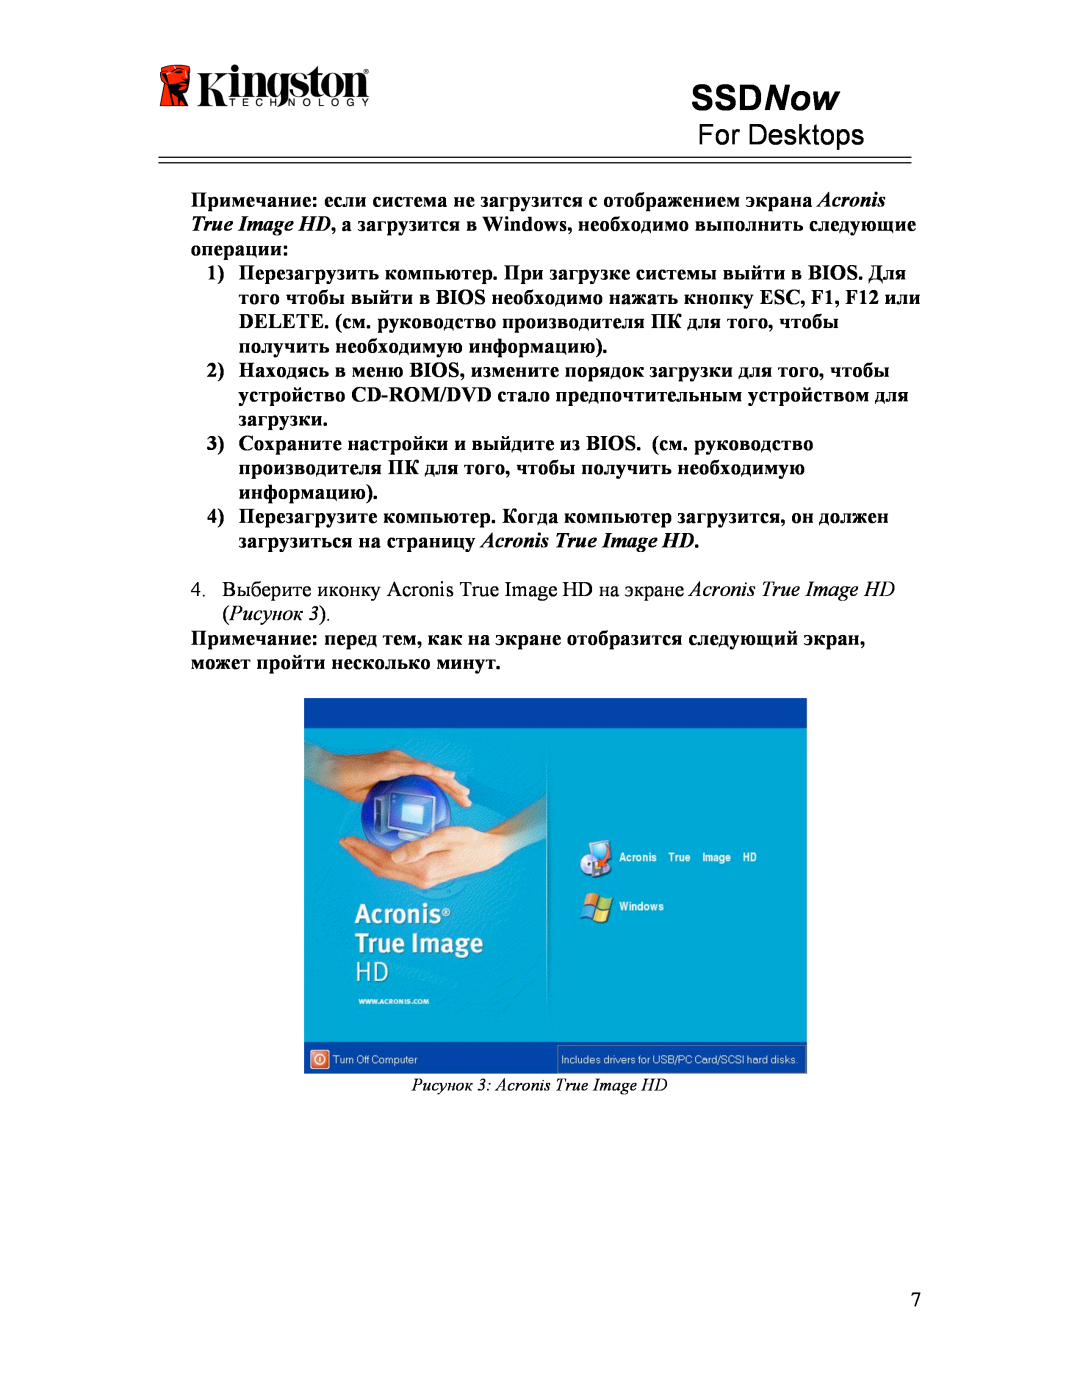 Kingston Technology 07-16-2009 manual SSDNow, For Desktops, Рисунок 3 Acronis True Image HD 